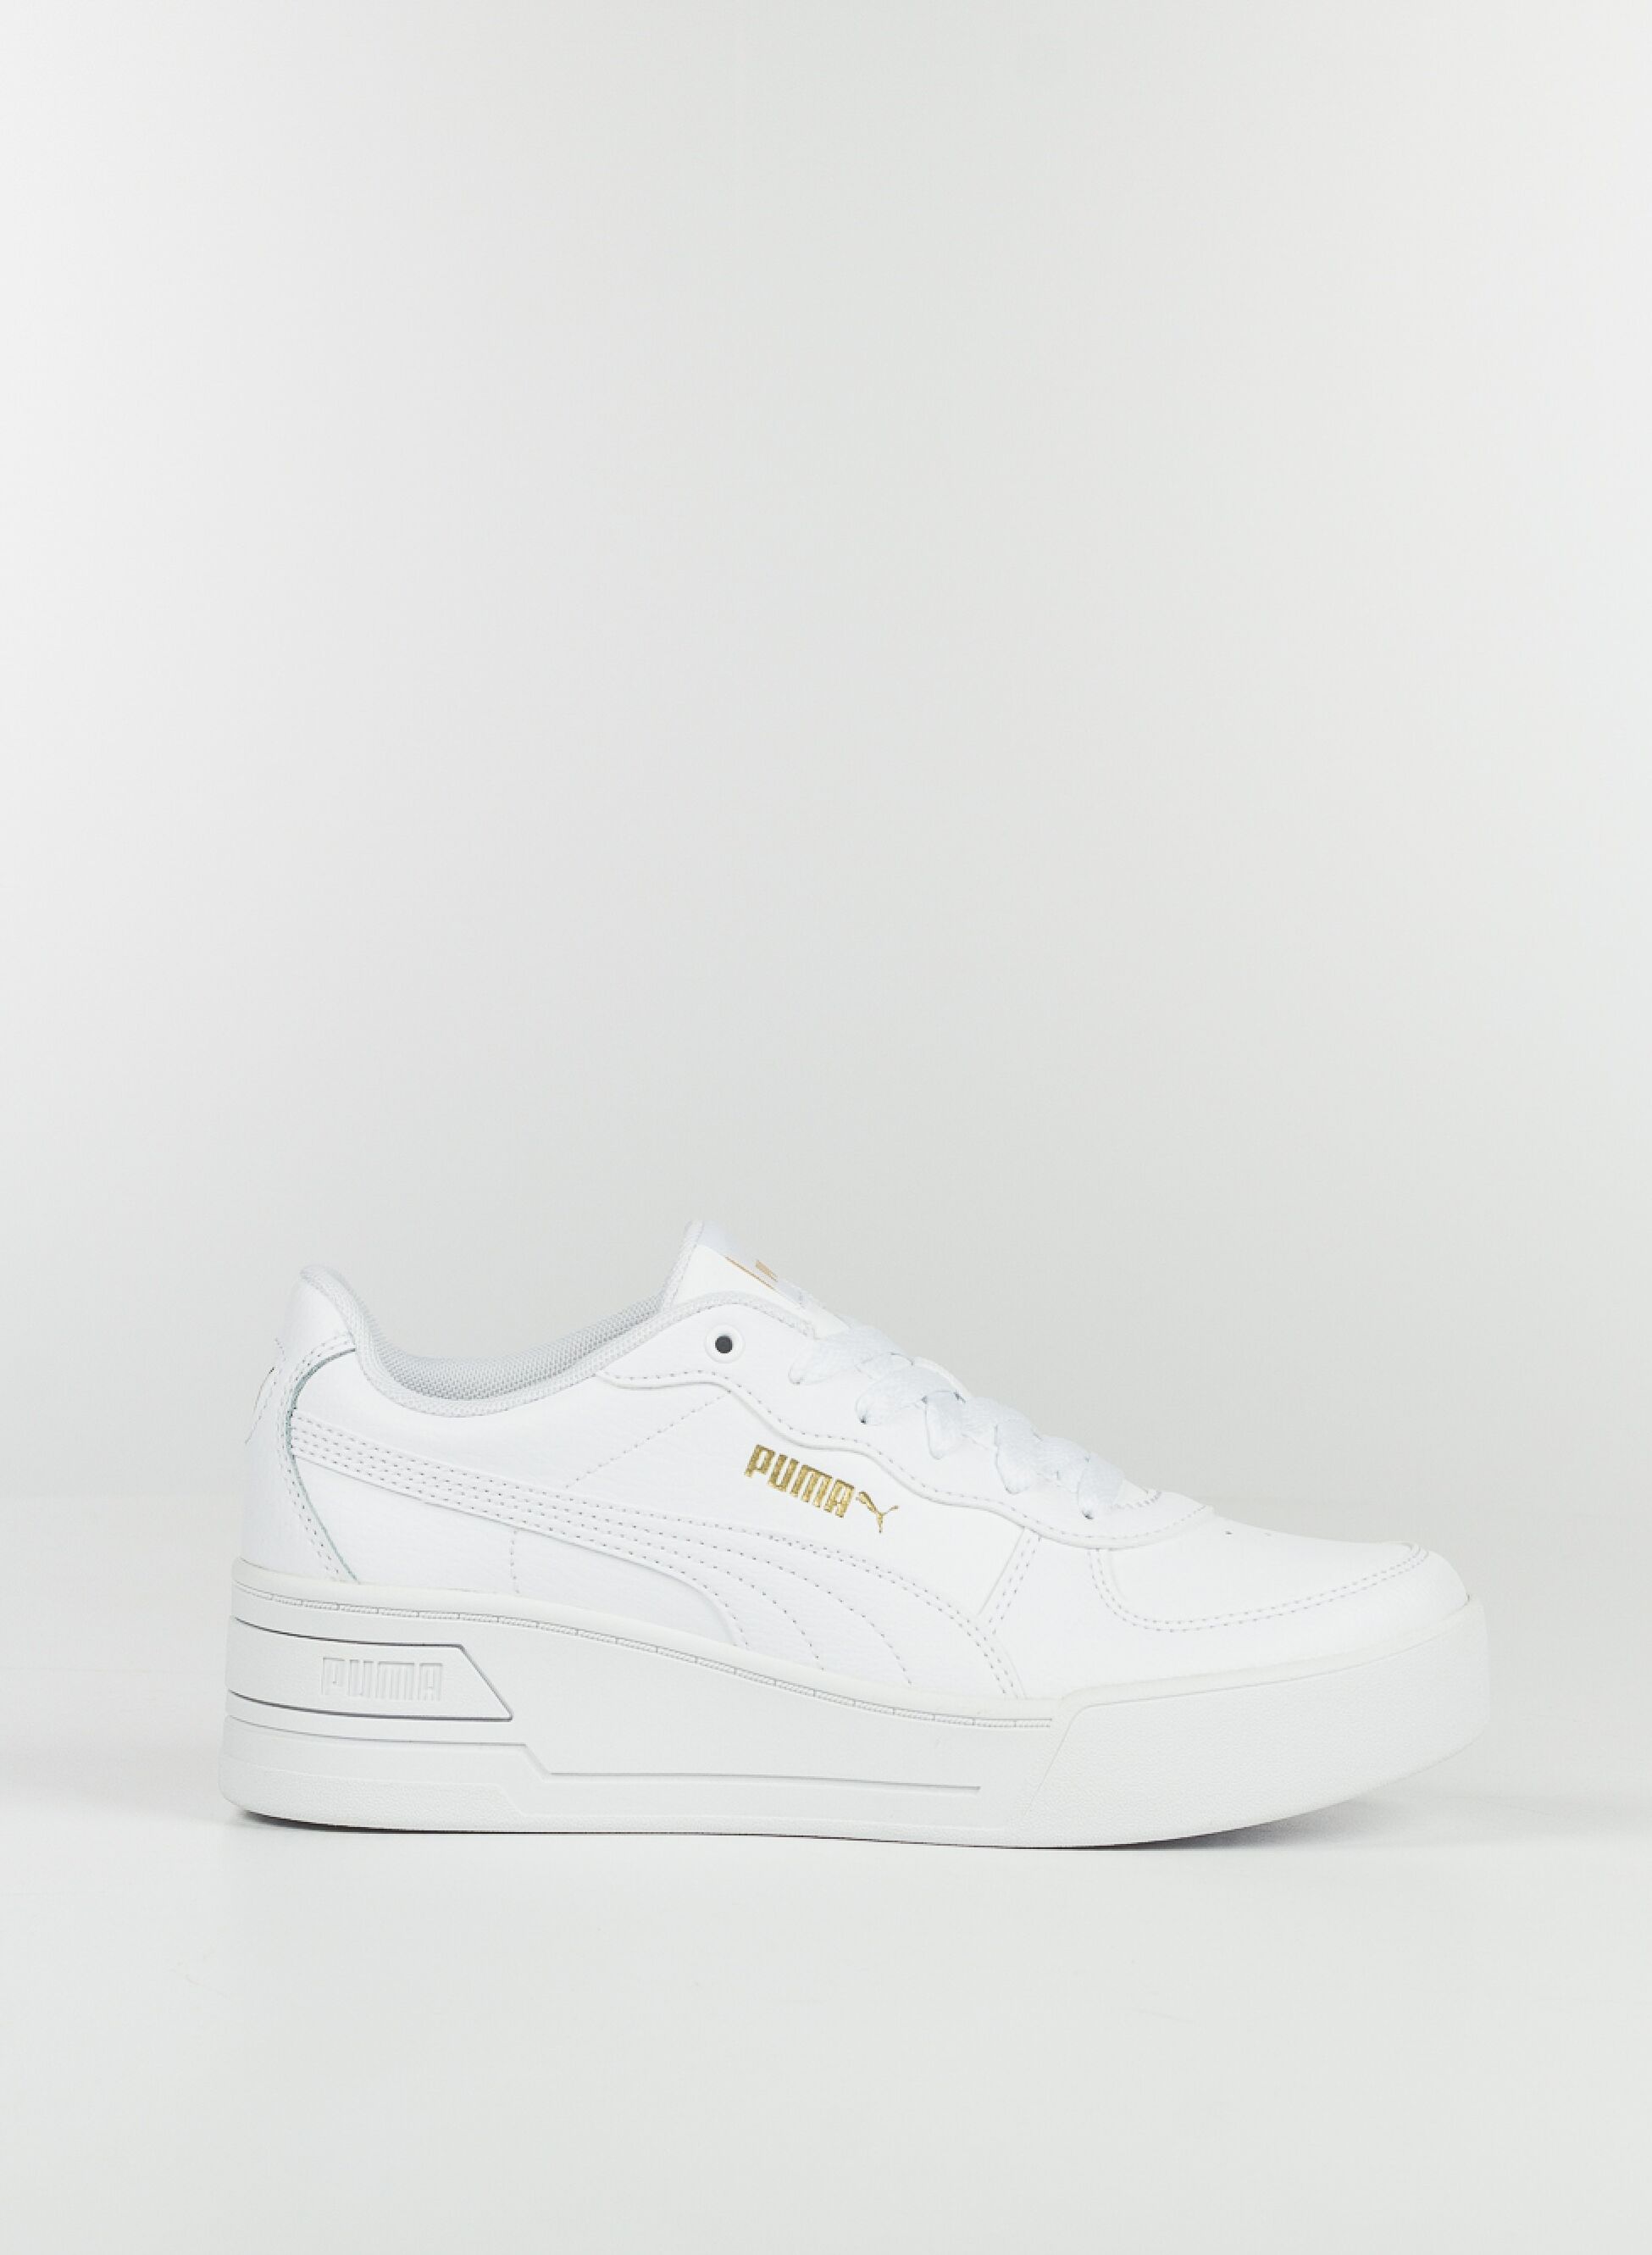 white puma wedge sneakers